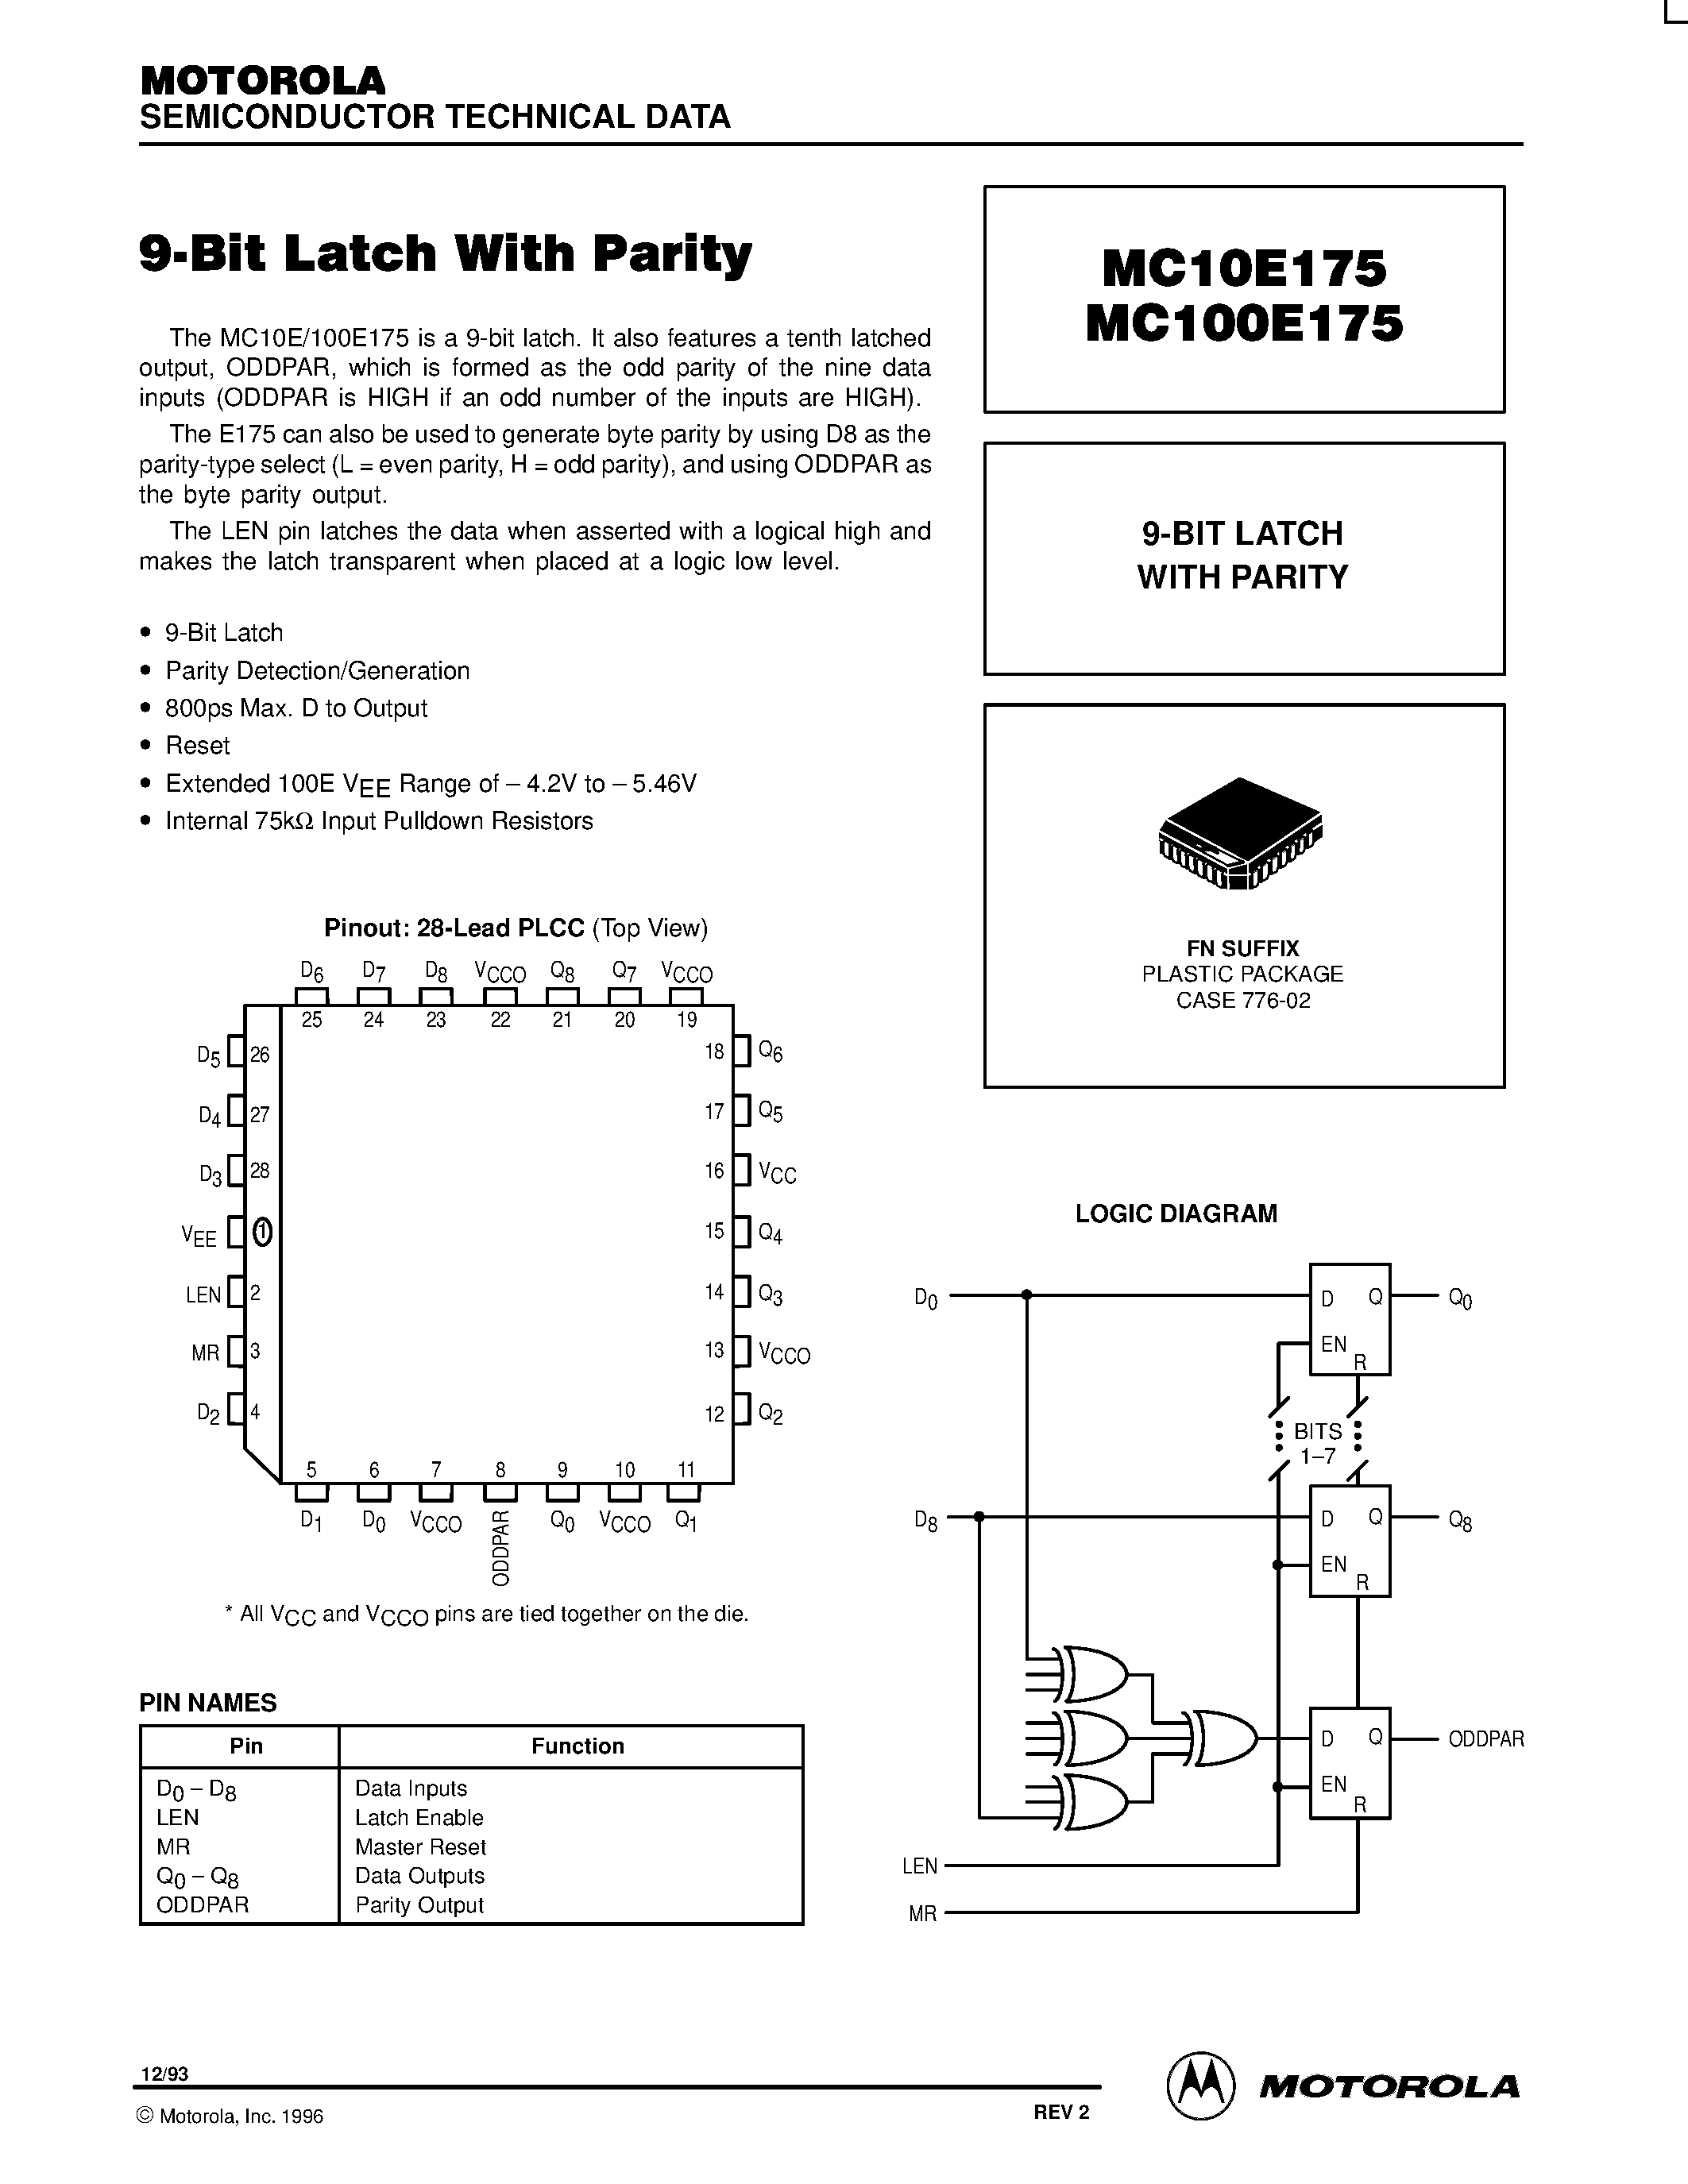 Datasheet MC100E175FN - 9-BIT LATCH WITH PARITY page 1